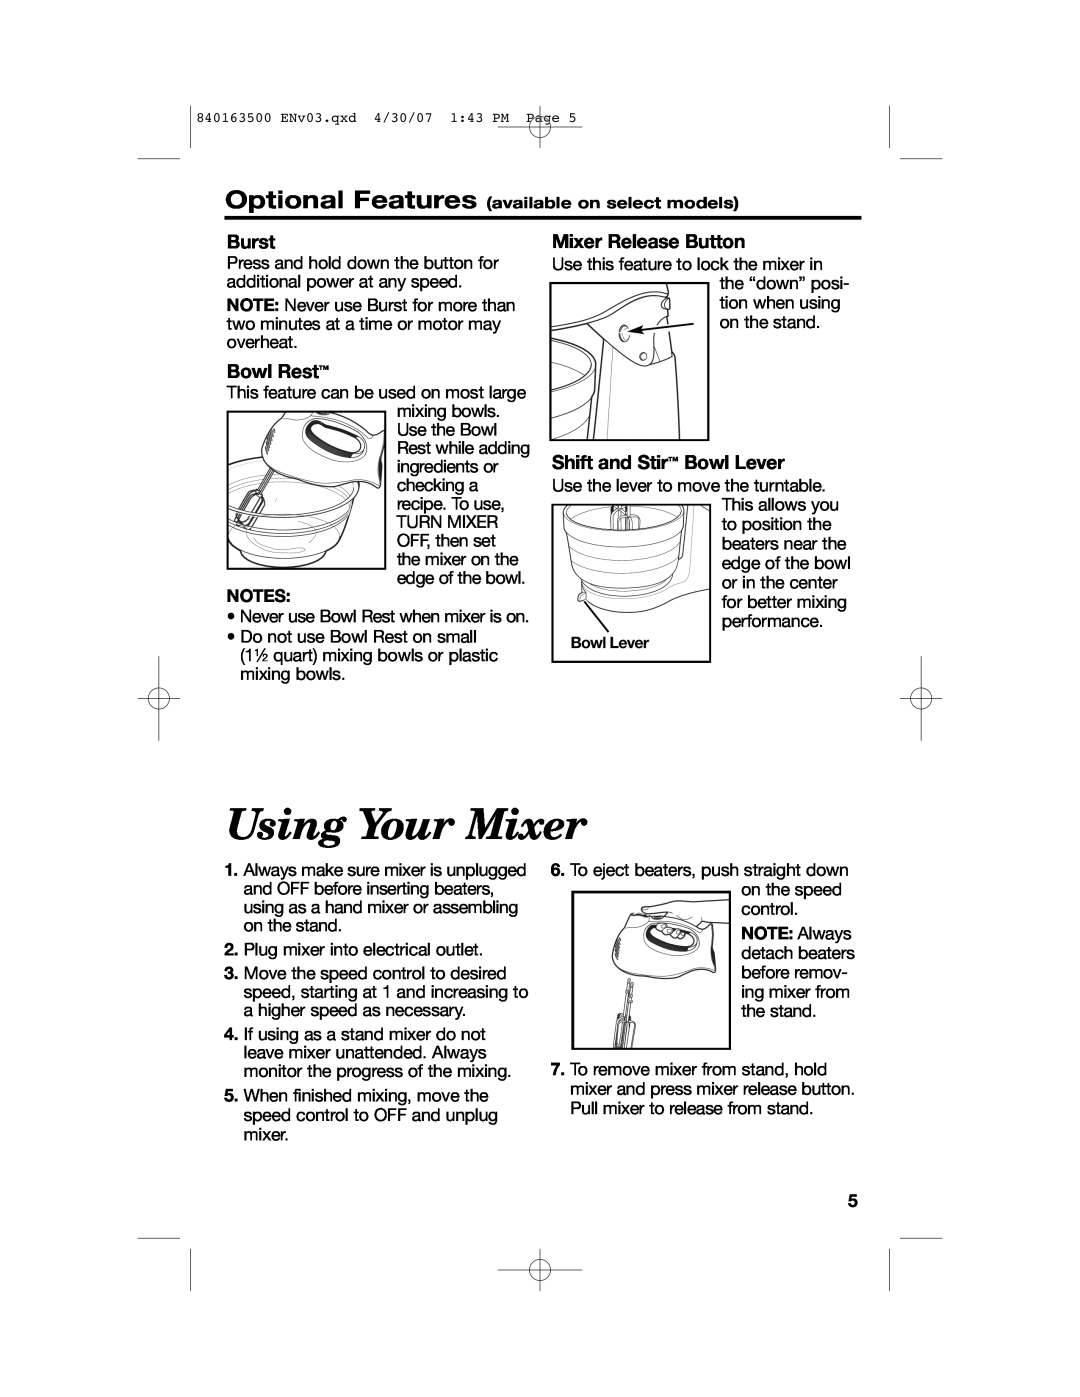 Hamilton Beach 64695N manual Using Your Mixer, Burst, Bowl Rest, Mixer Release Button, Shift and Stir Bowl Lever 